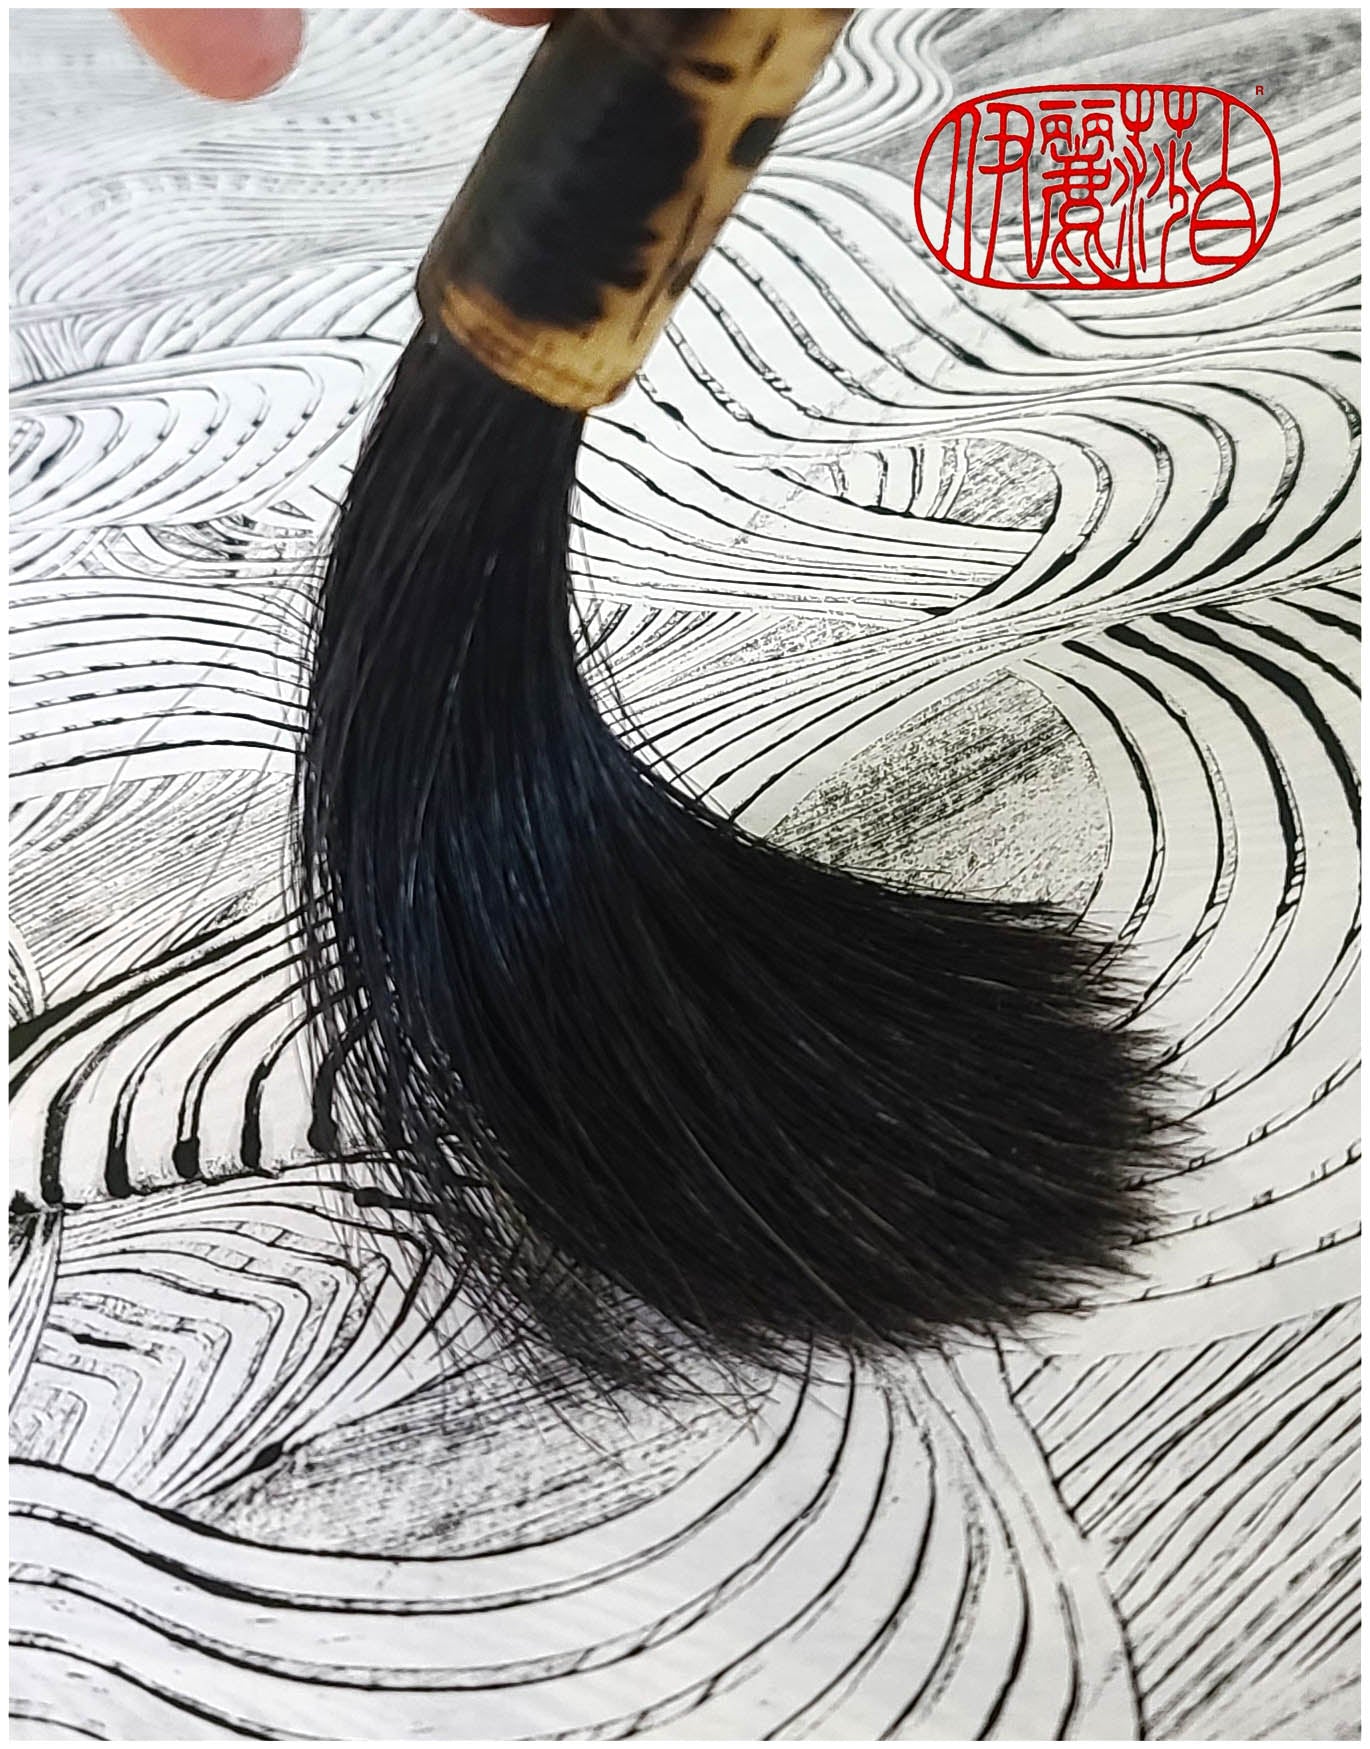 4" BLack Horsehair Paint Brush With Bamboo Handle Art Supplies Elizabeth Schowachert Art